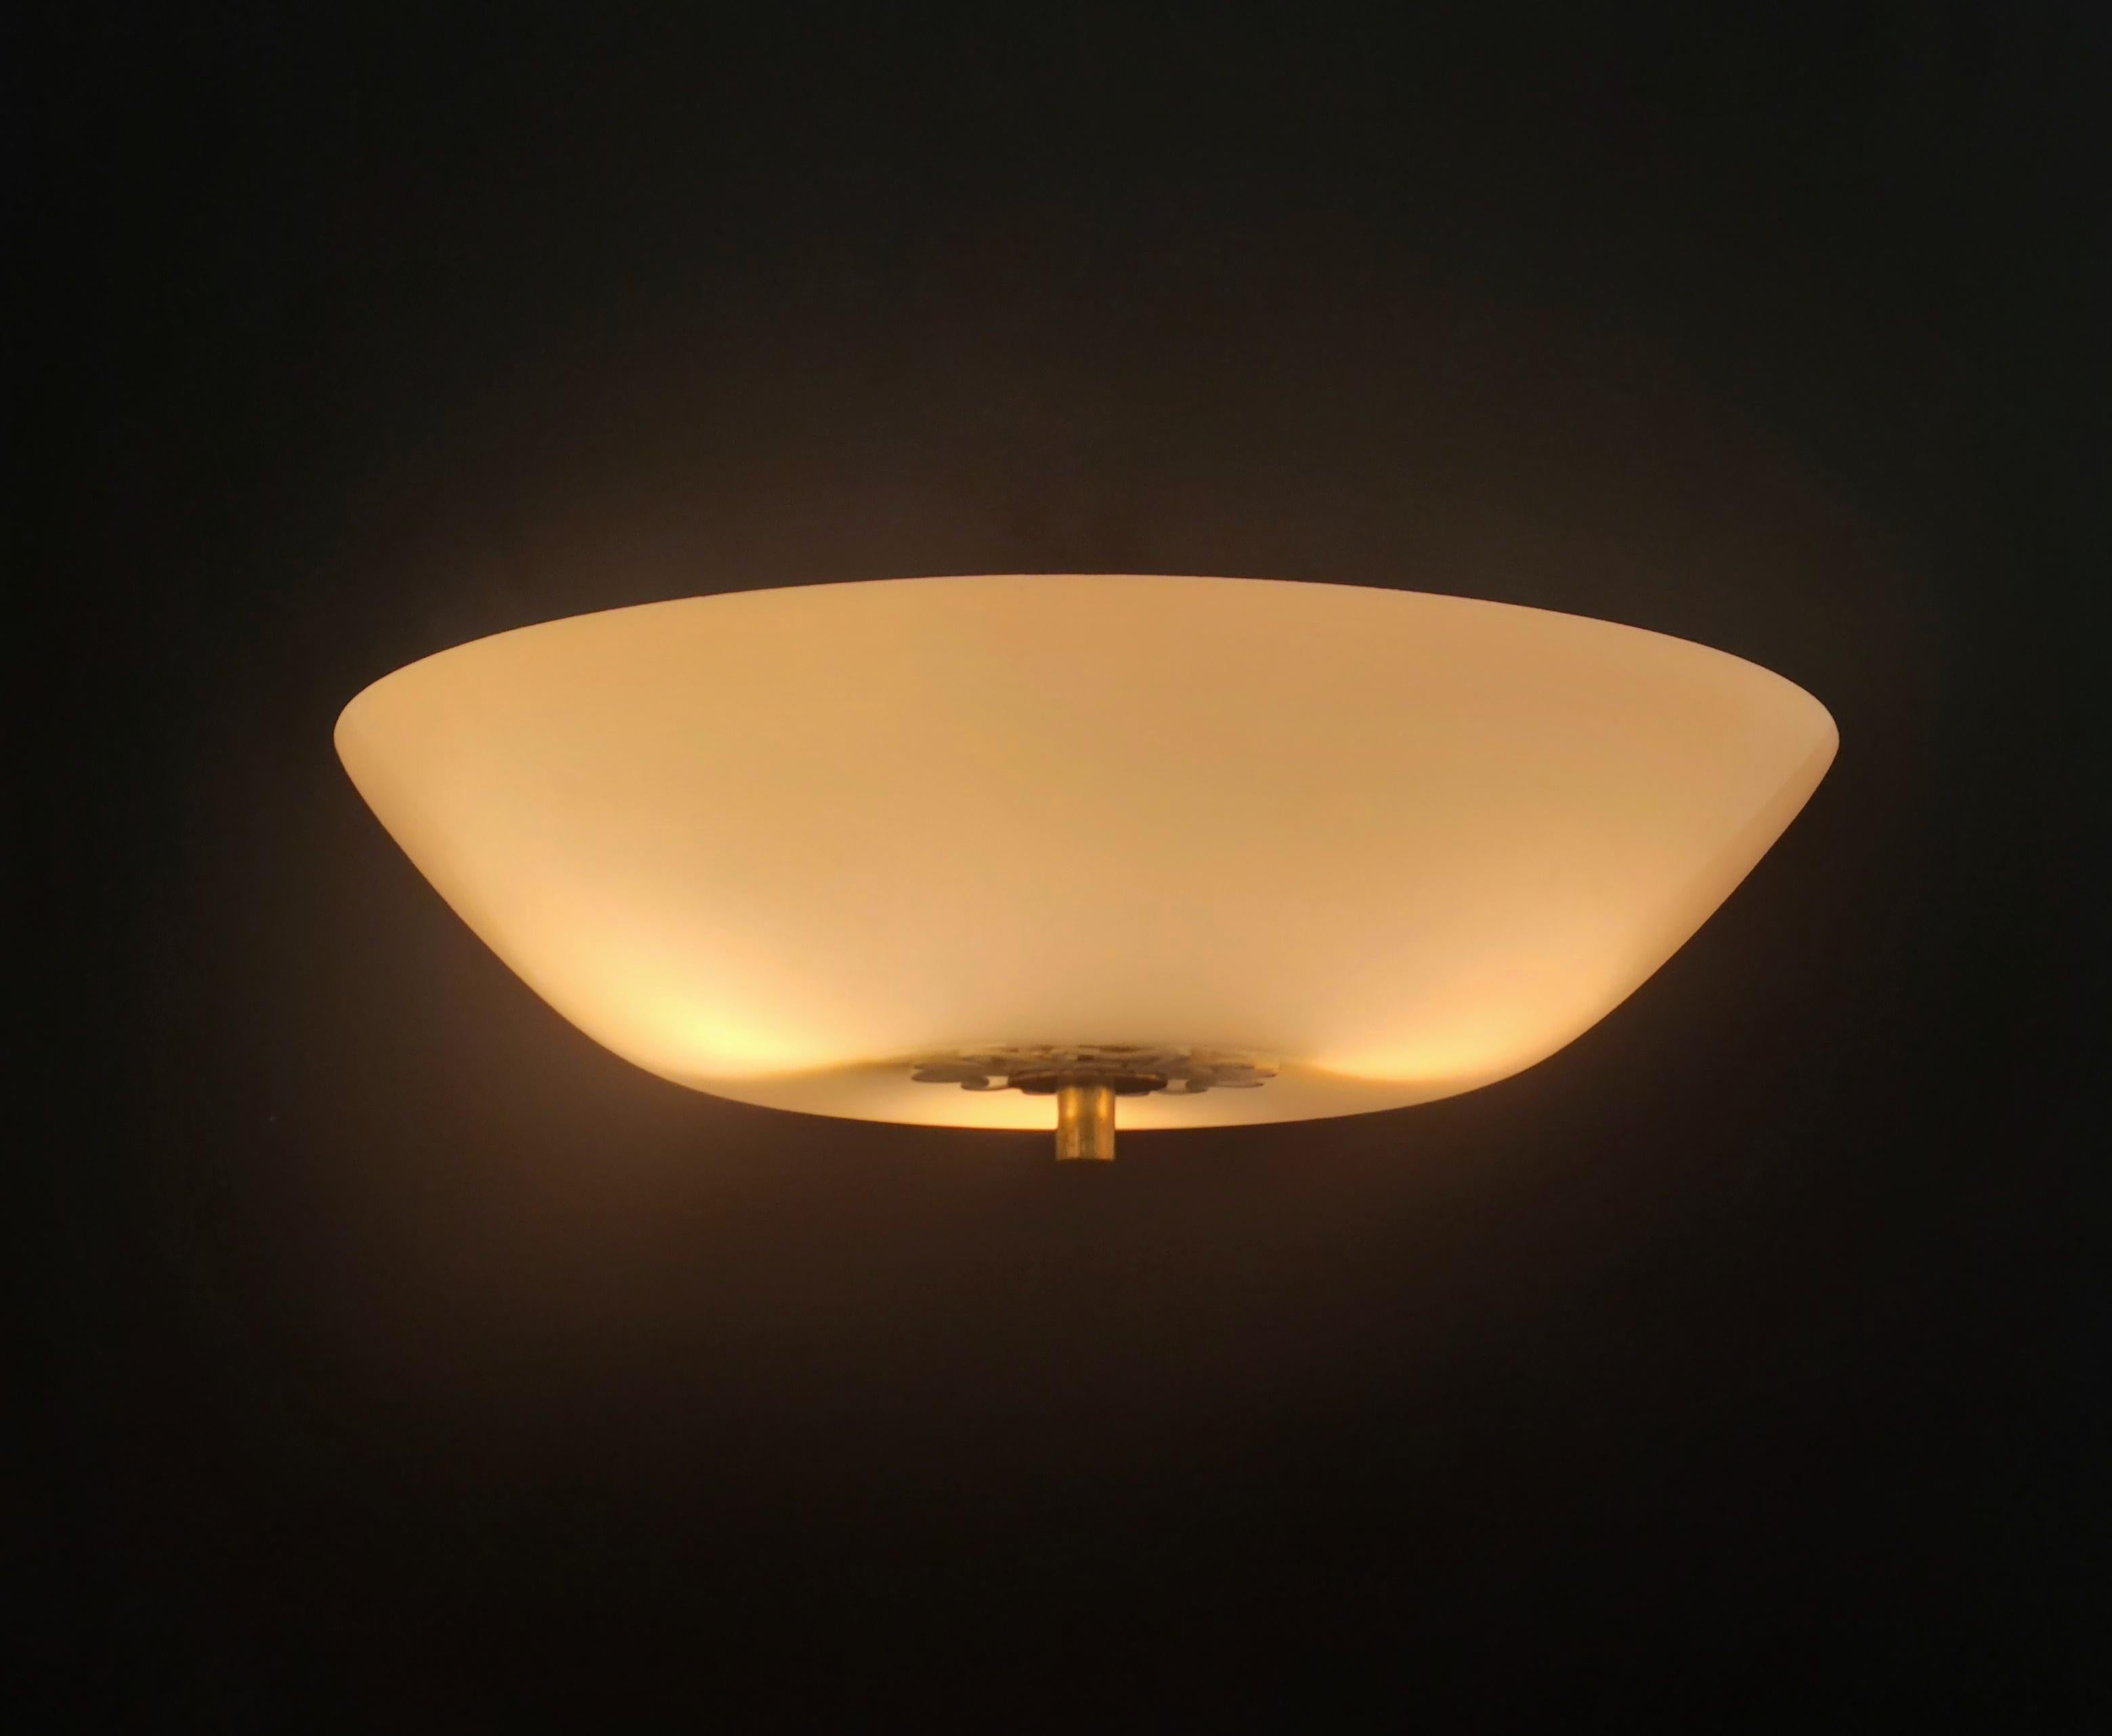 Mid-20th Century Lisa Johansson-Johansson-Papé Ceiling Lamp Model 71-005 for Orno For Sale